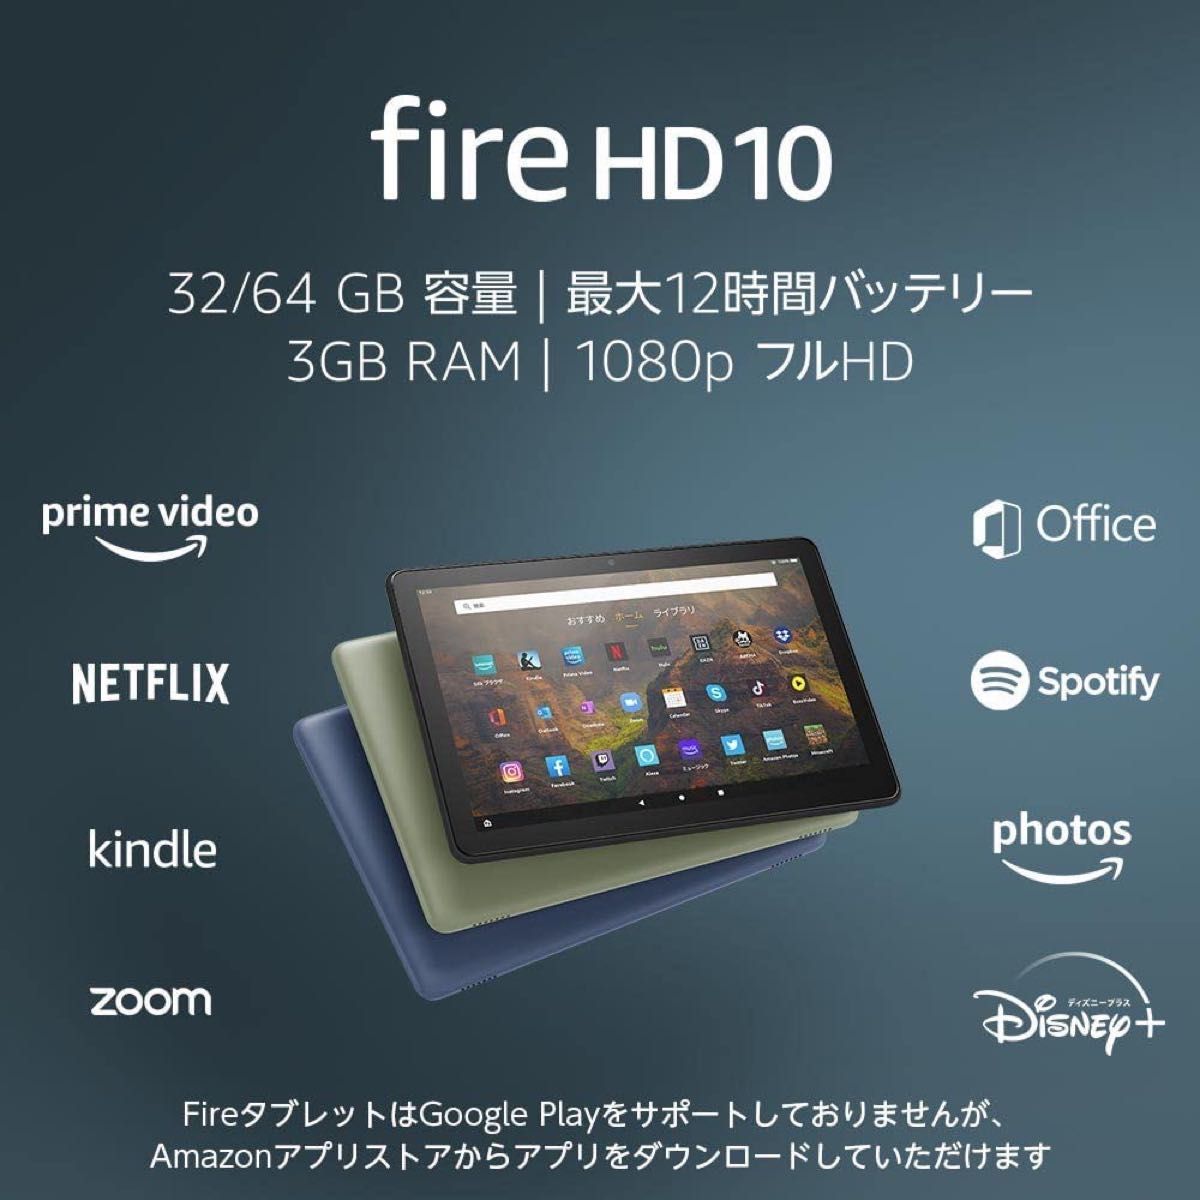 Amazon fire HD 10 最新版 第11世代 32GB ブラック 中古美品 カバー